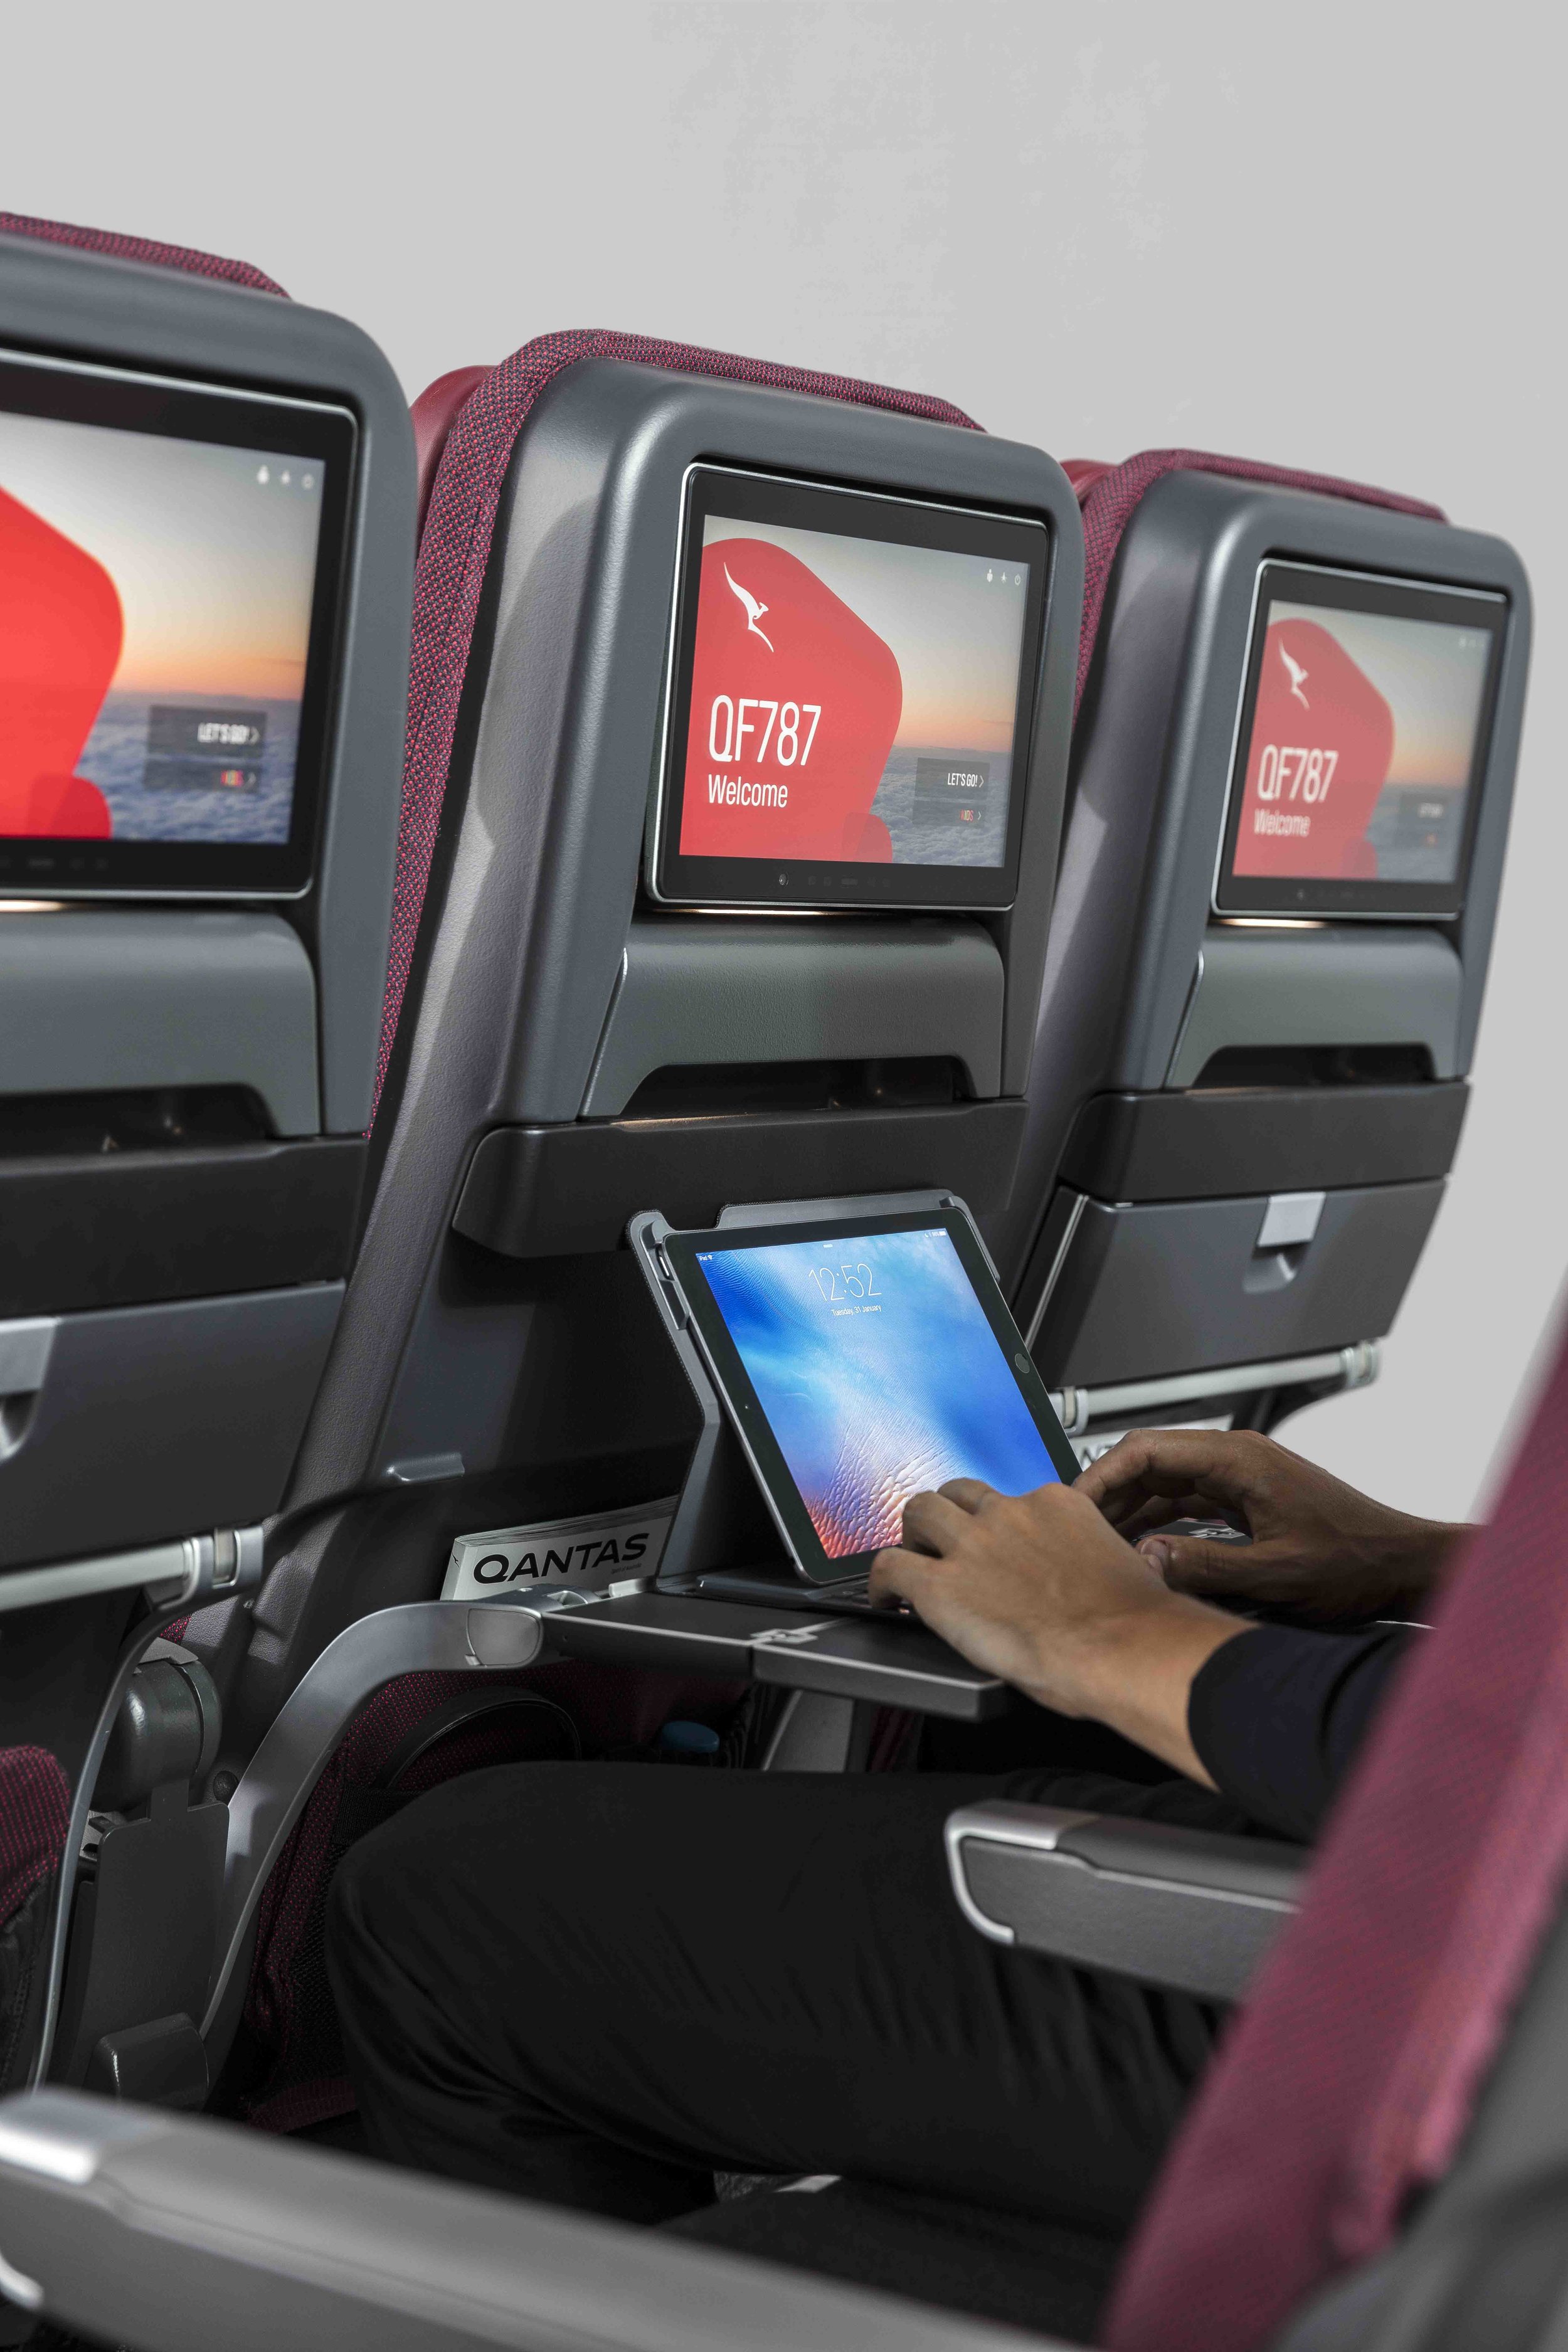 Qantas 787 Dreamliner Premium Economy Seats by Caon Studio